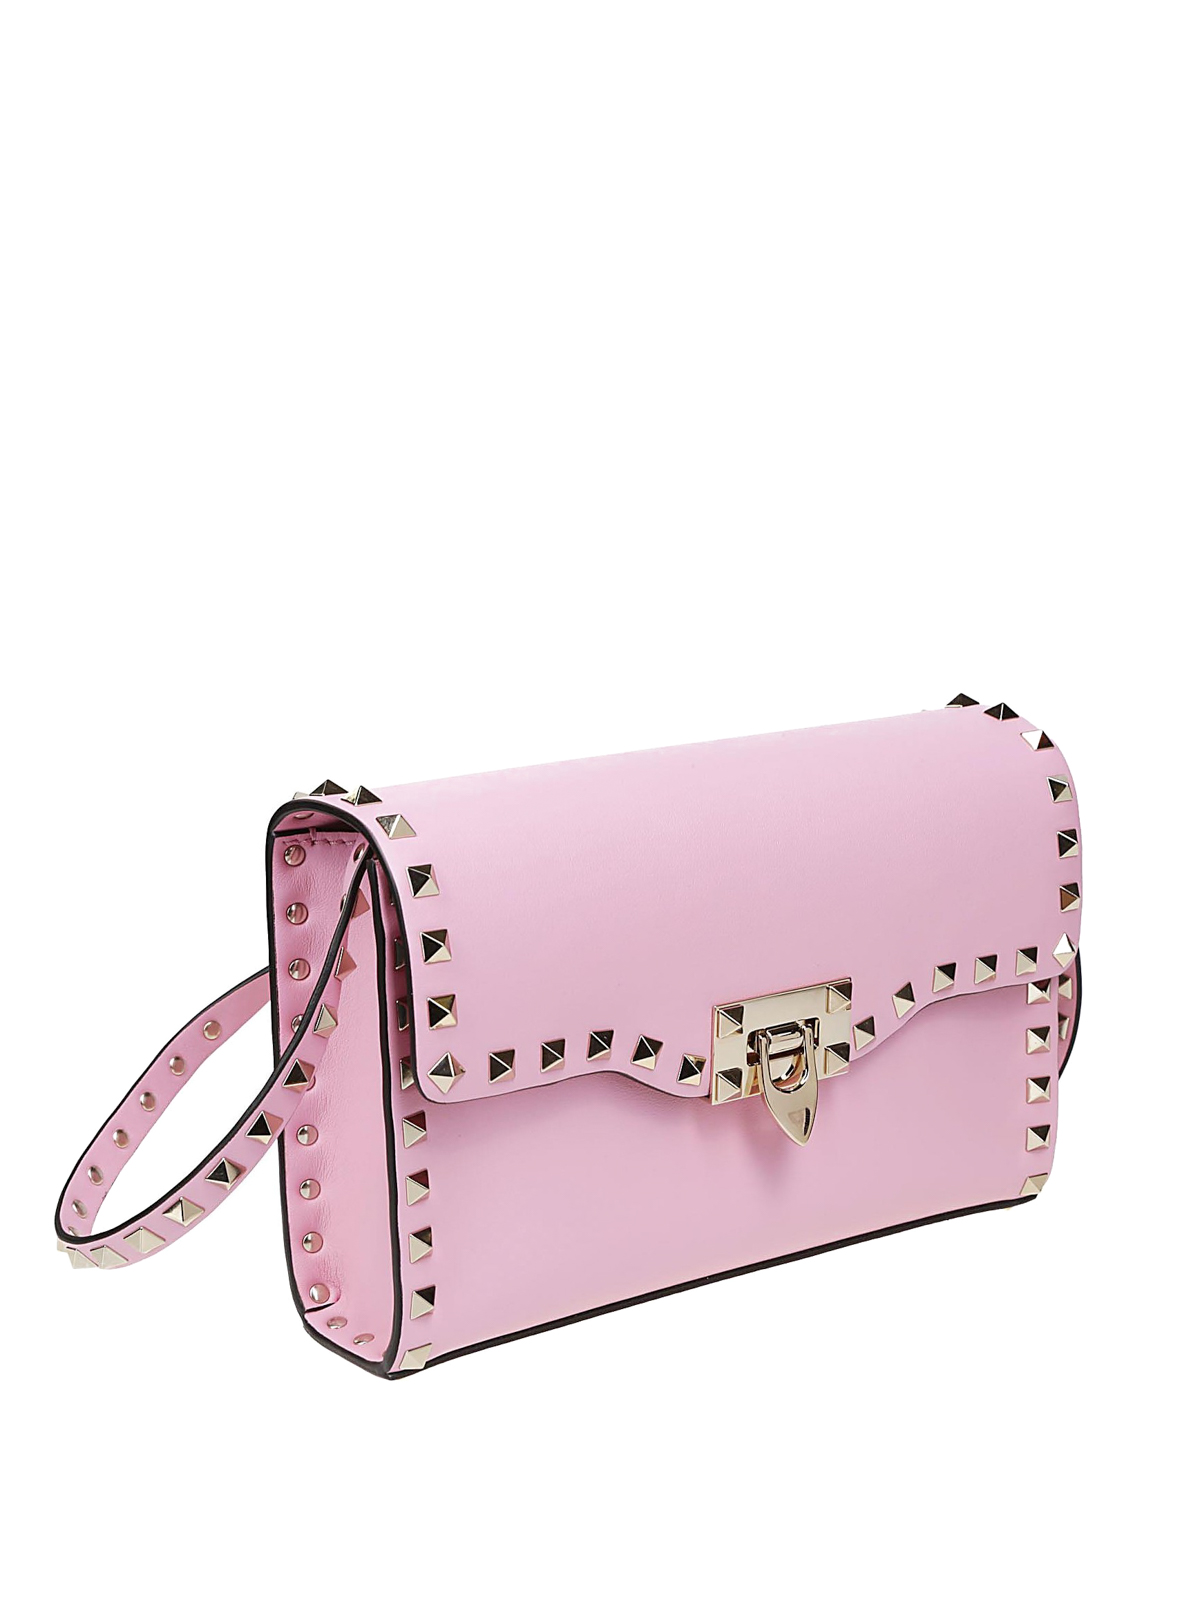 Tåget væv Støv Cross body bags Valentino Garavani - Rockstud pink smooth leather small bag  - QW2B0181WCICY4